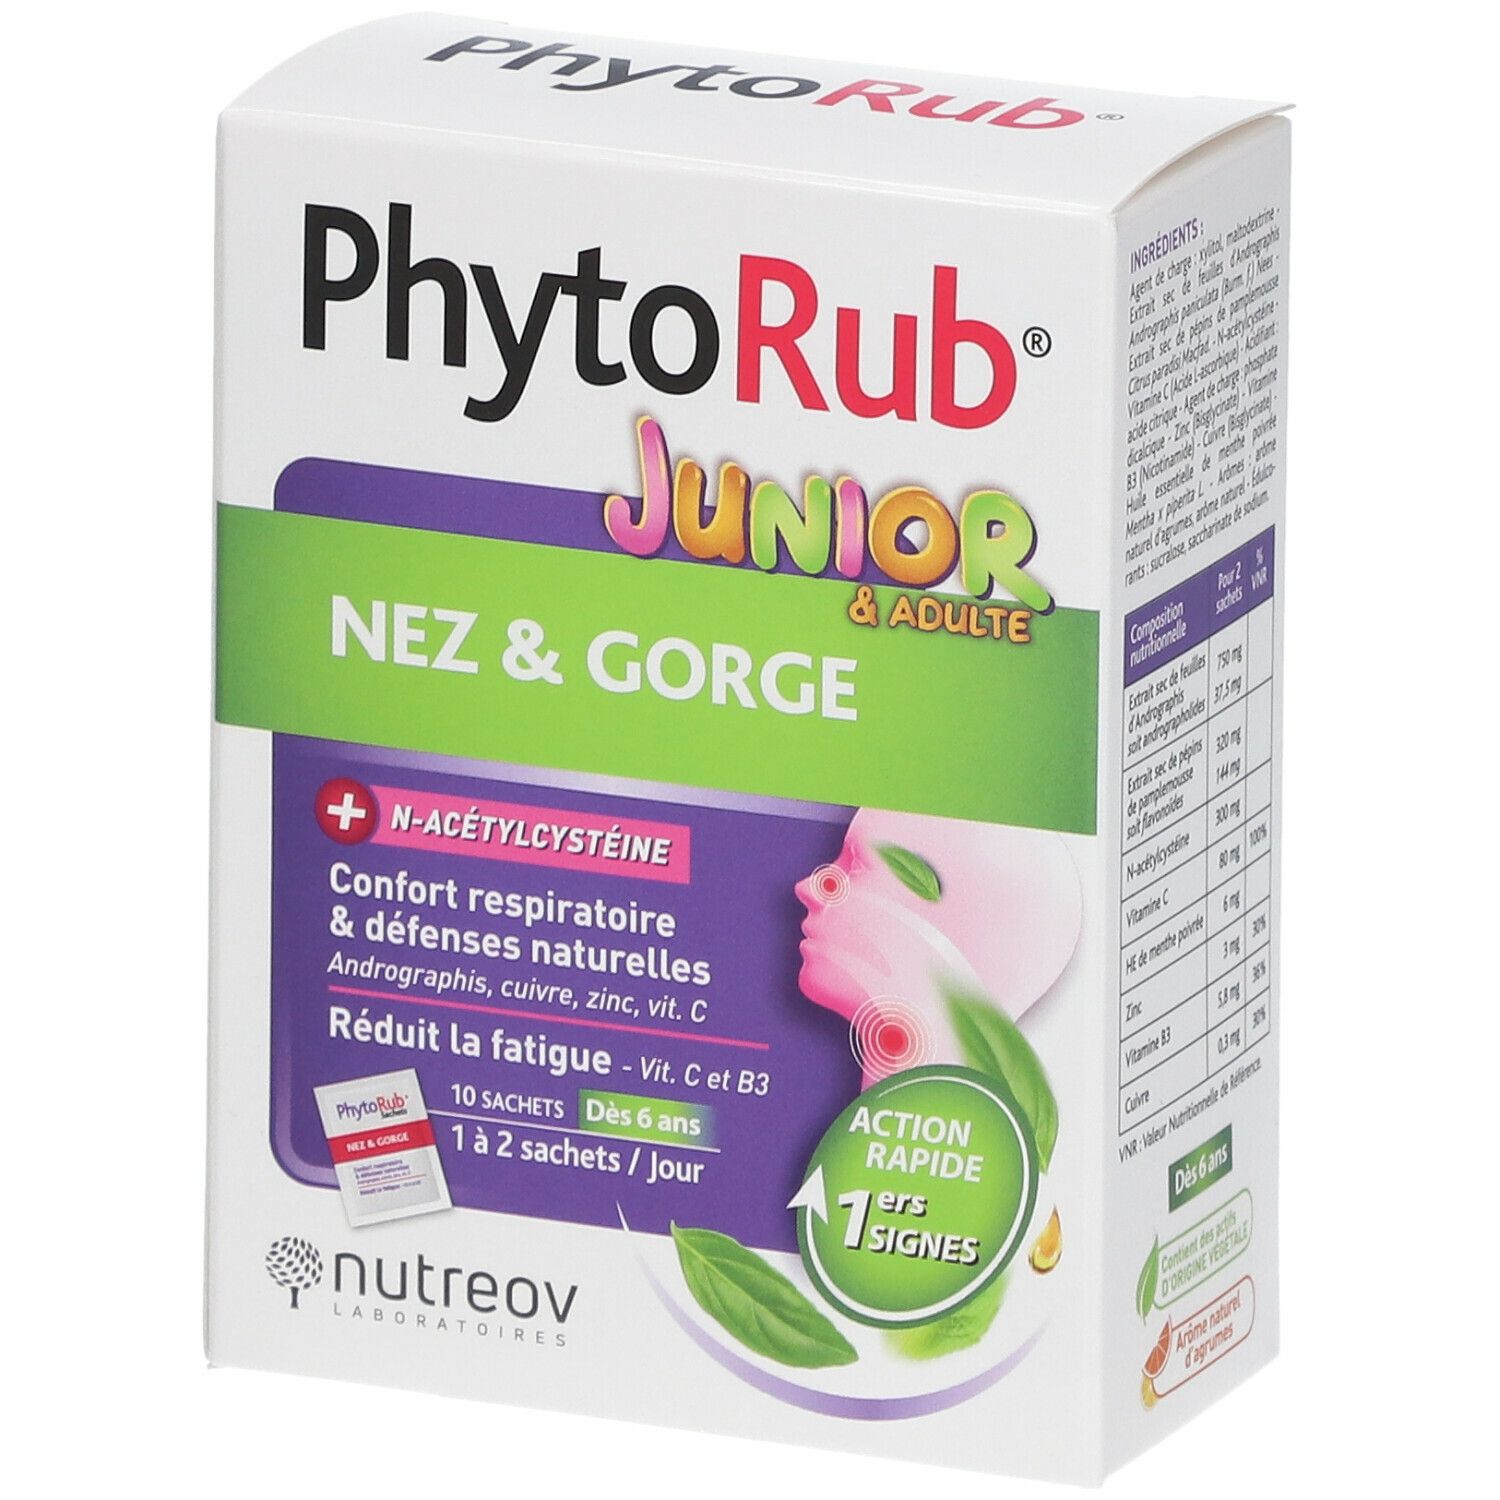 Nutreov Physcience PhytoRub® Junior & Adulte Nez & Gorge